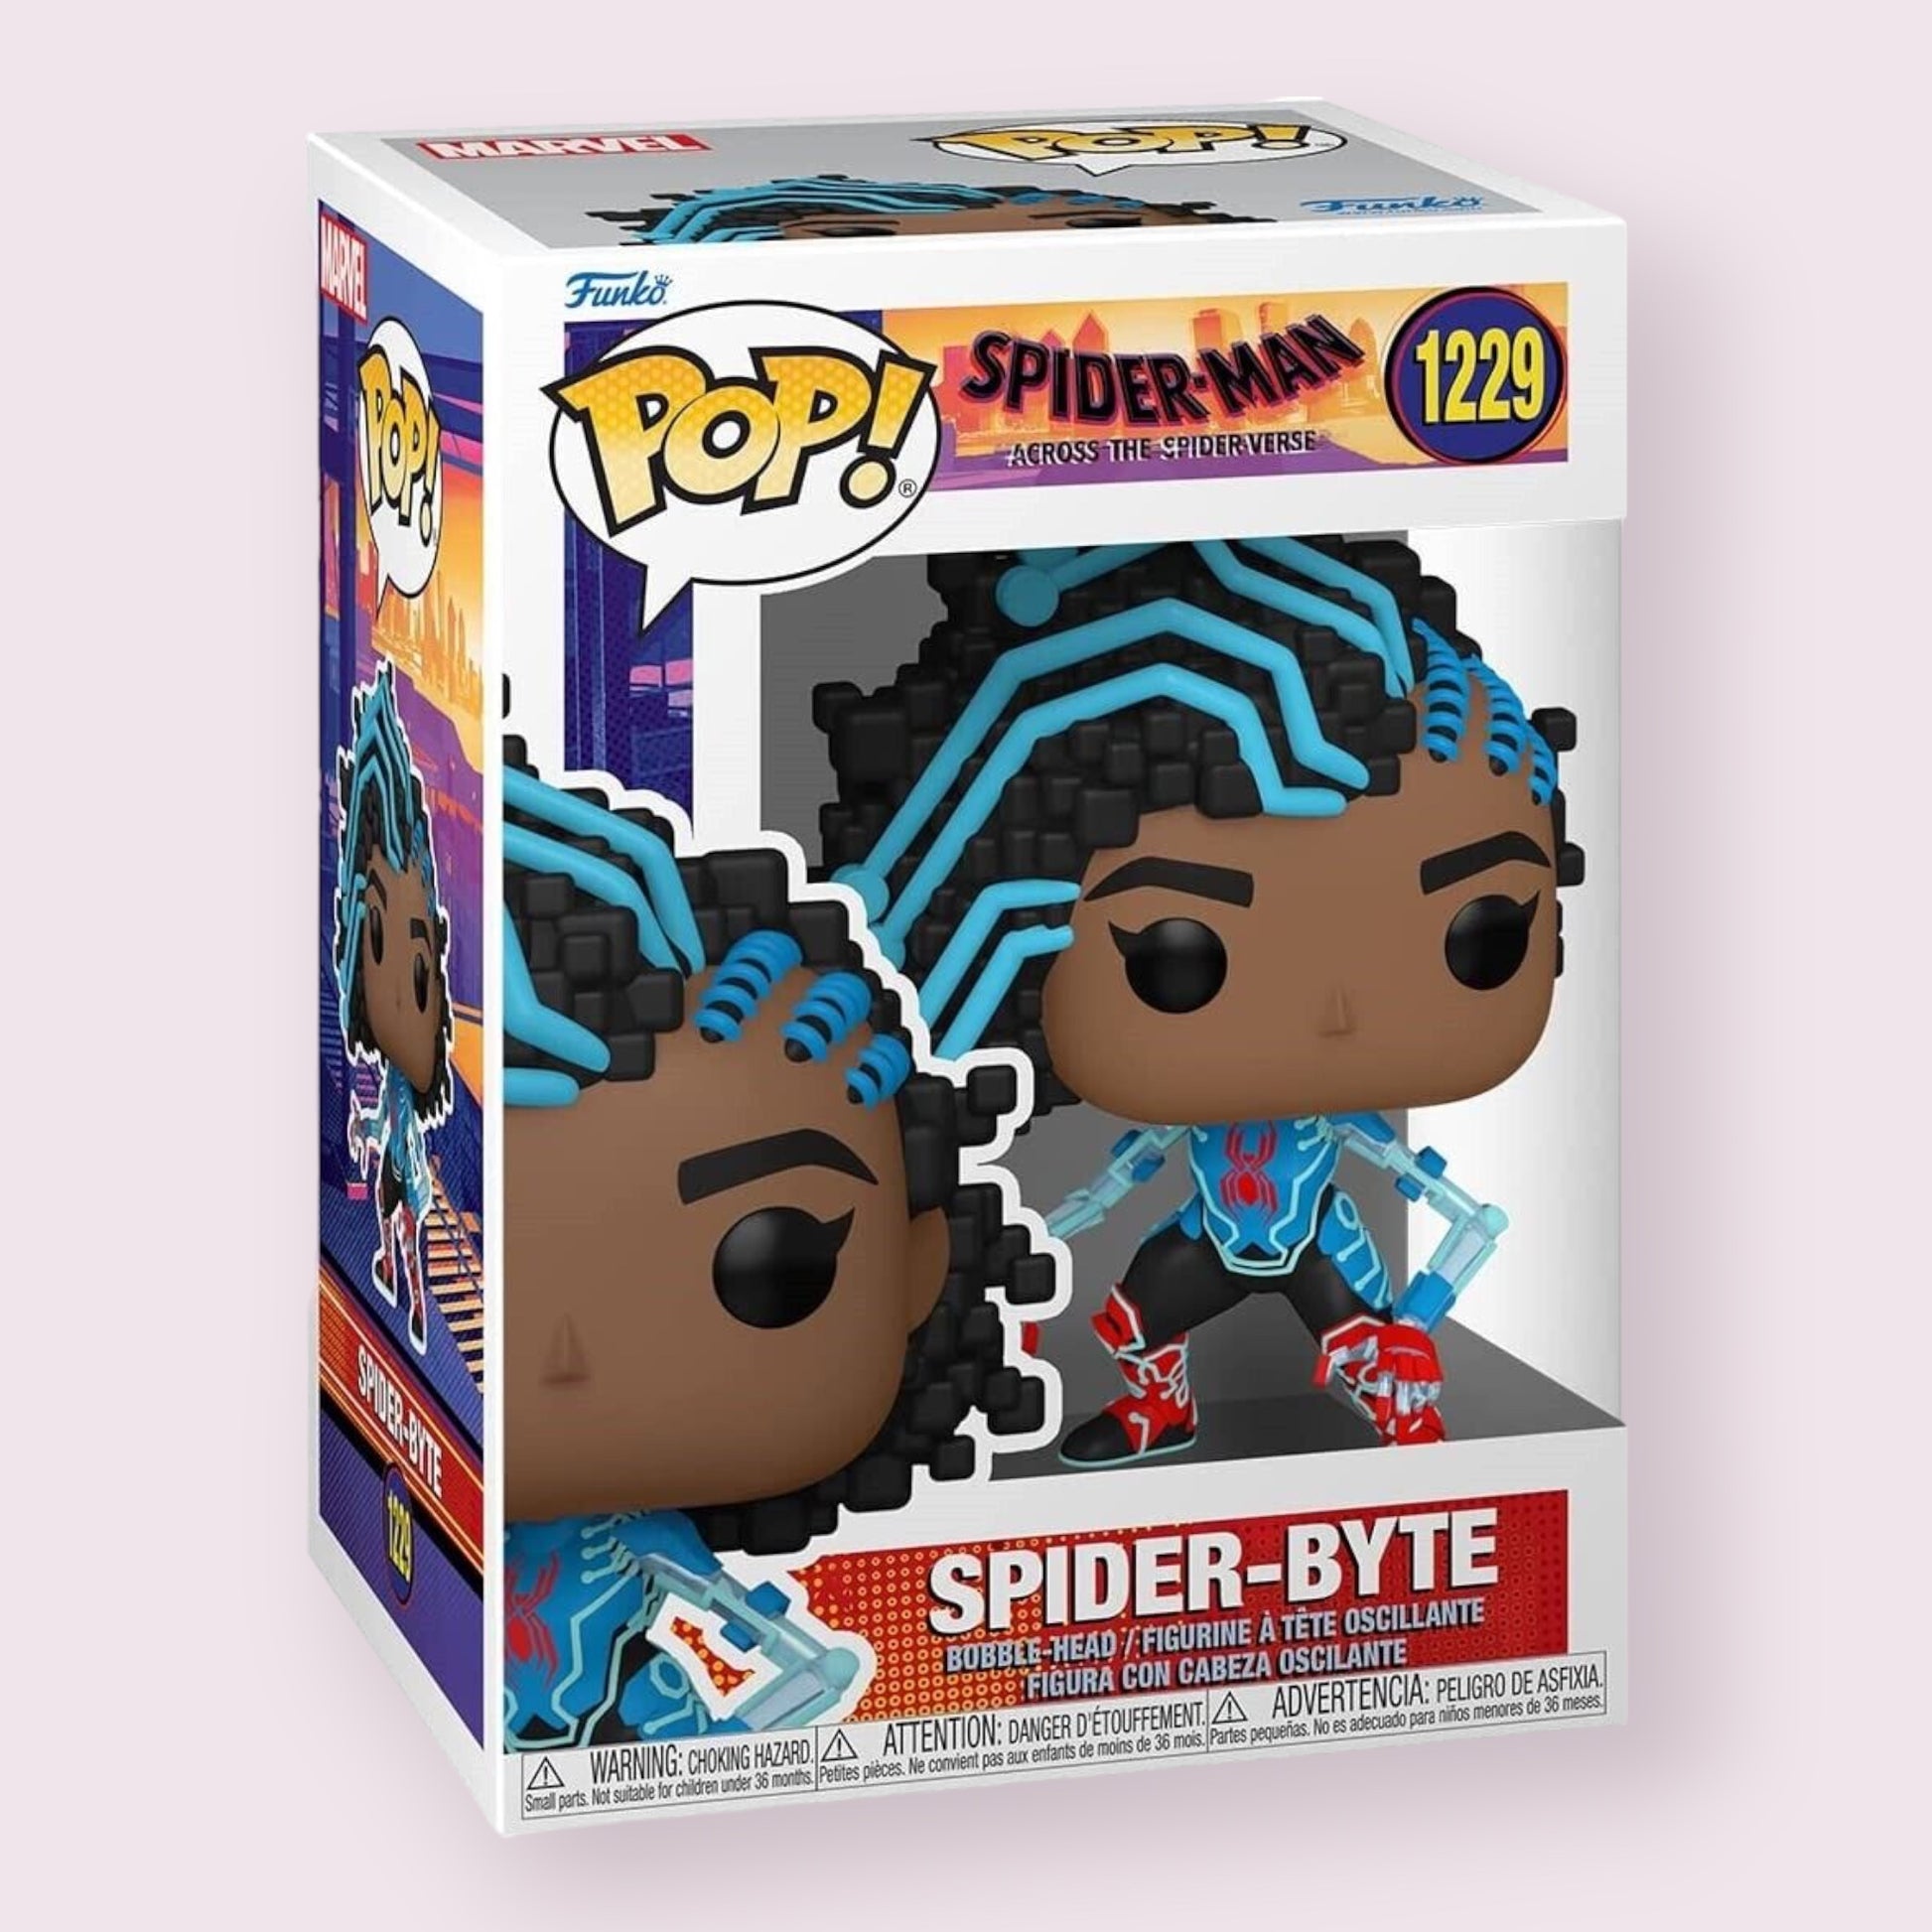 POP! Spider-byte  Pixie Candy Shoppe   